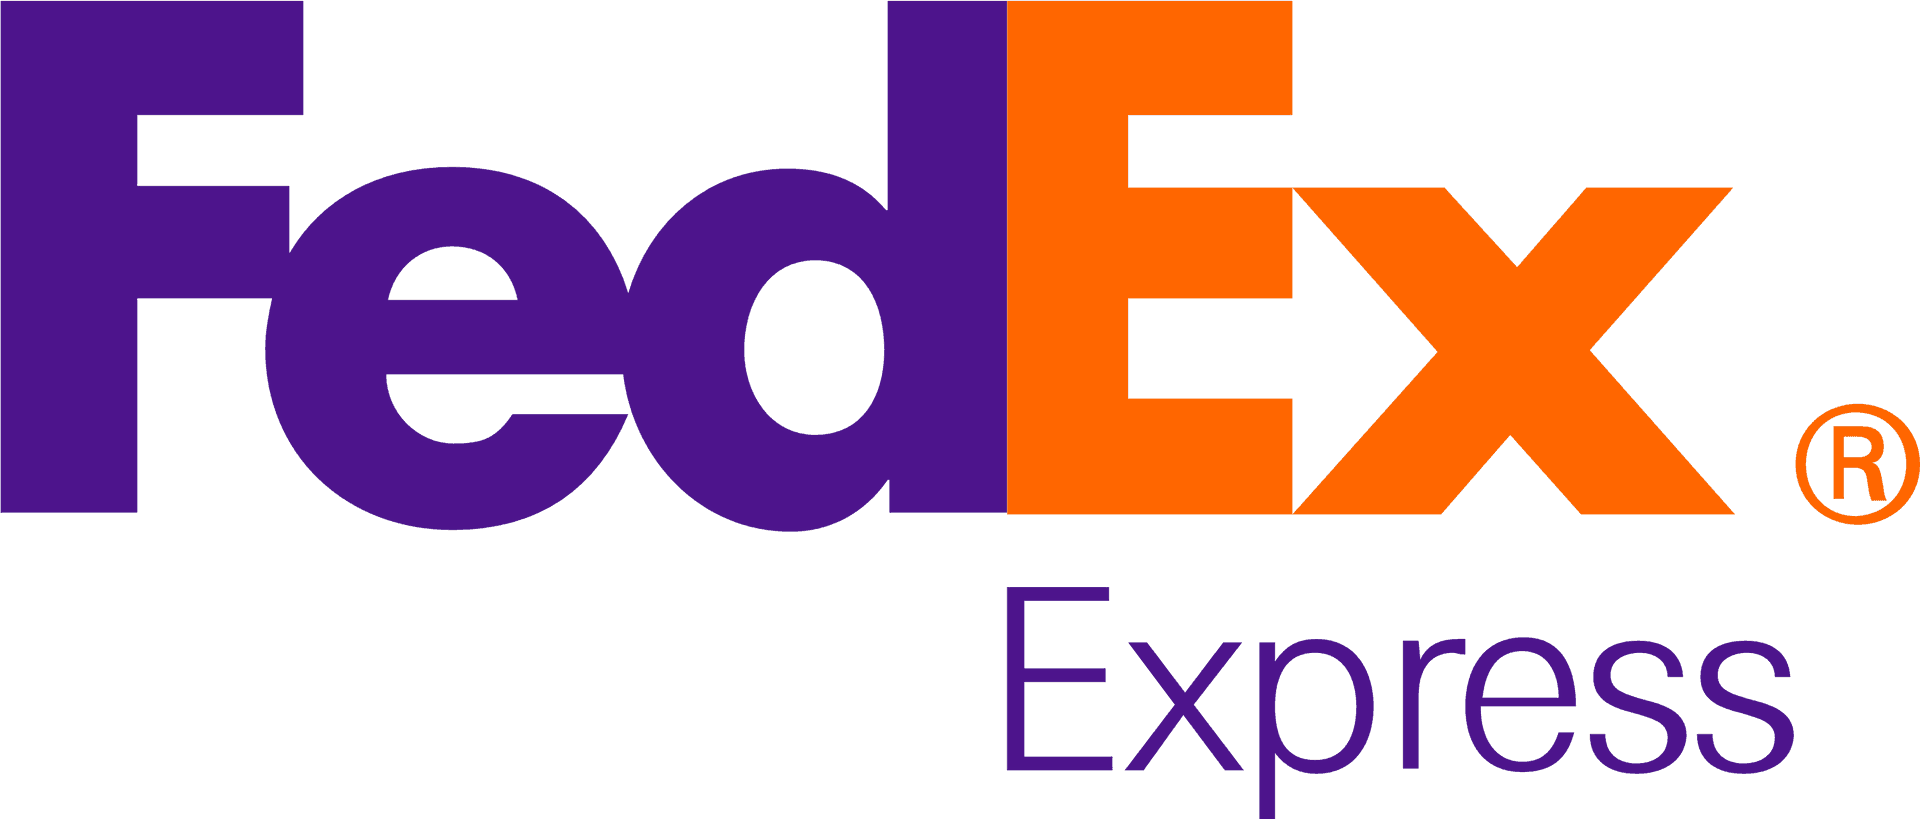 Fed Ex Express Logo PNG